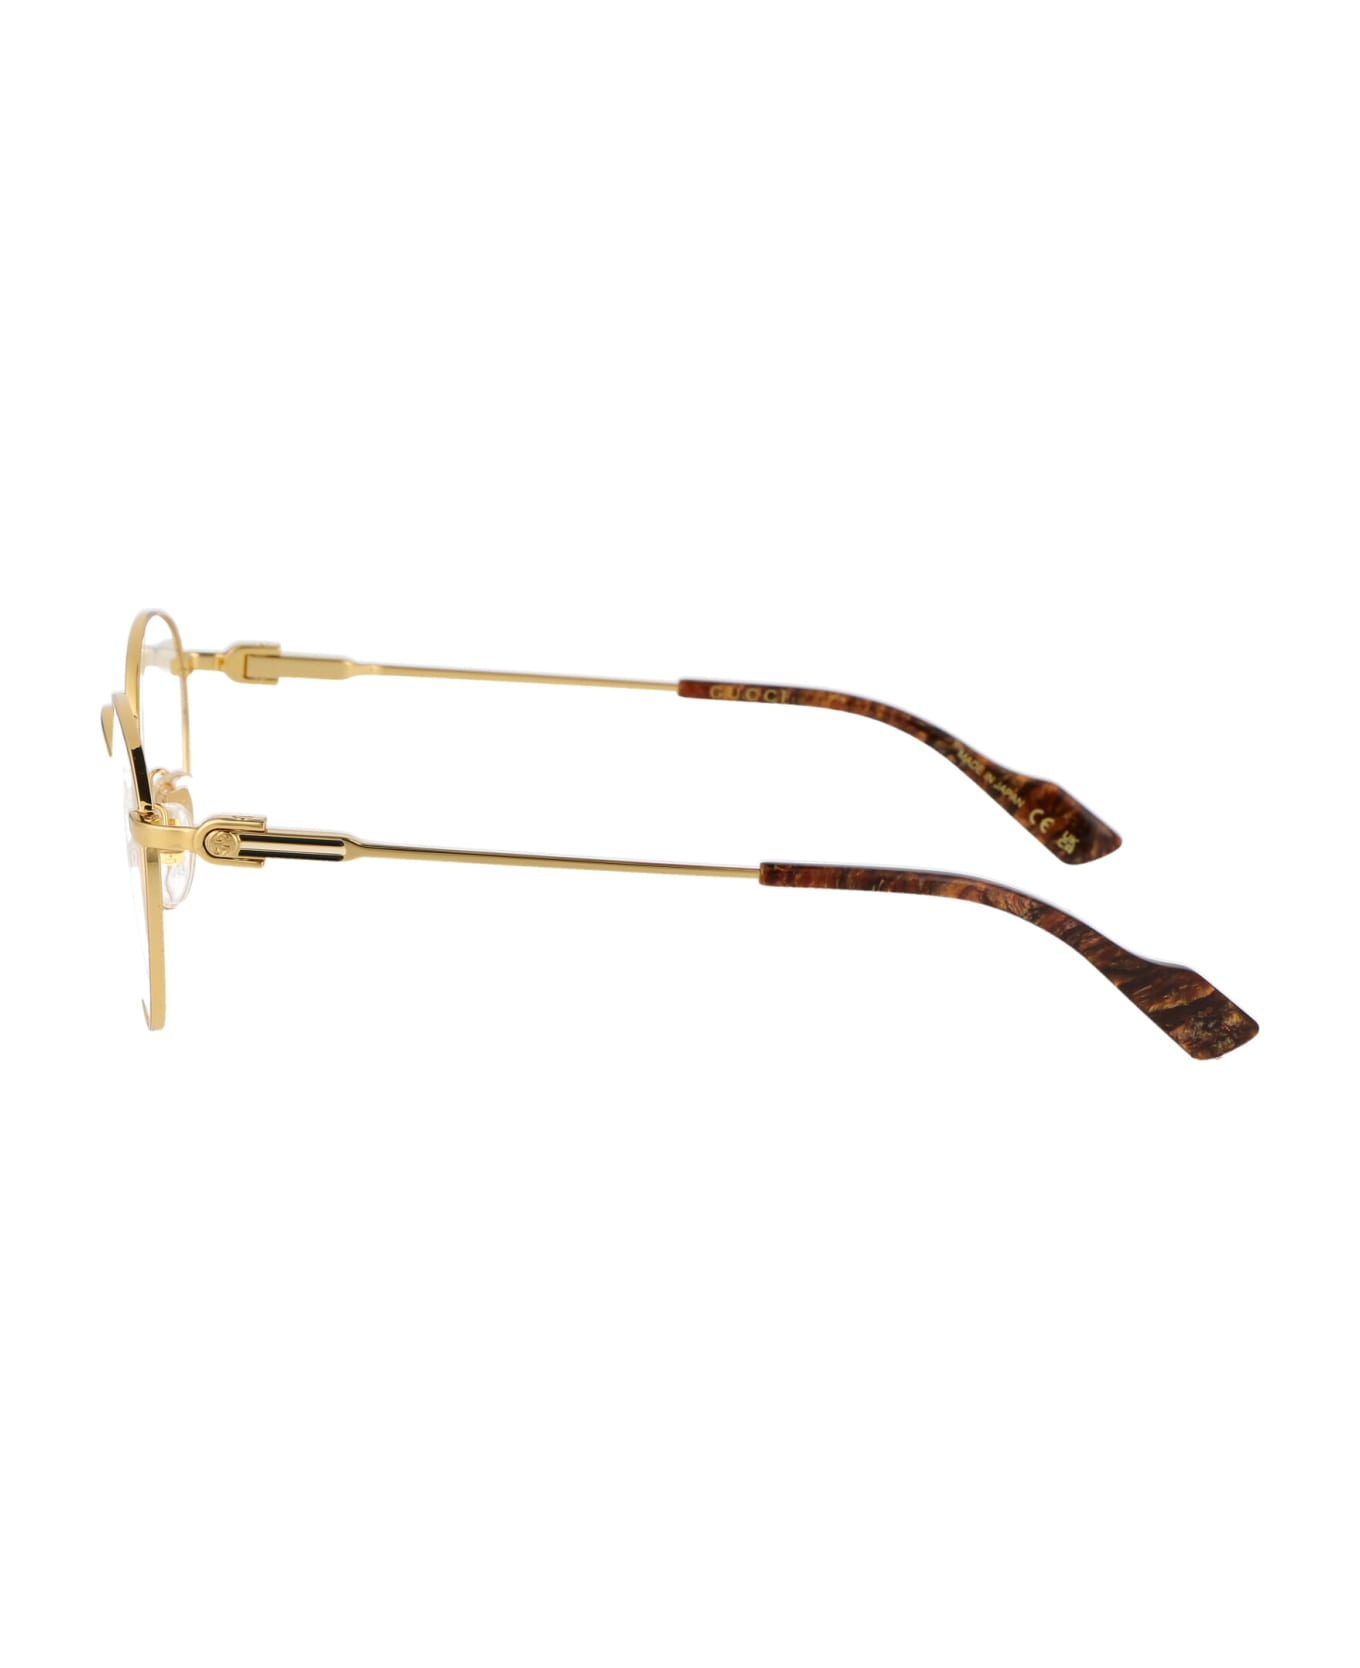 Gucci Eyewear Gg1222o Glasses - 003 GOLD GOLD TRANSPARENT